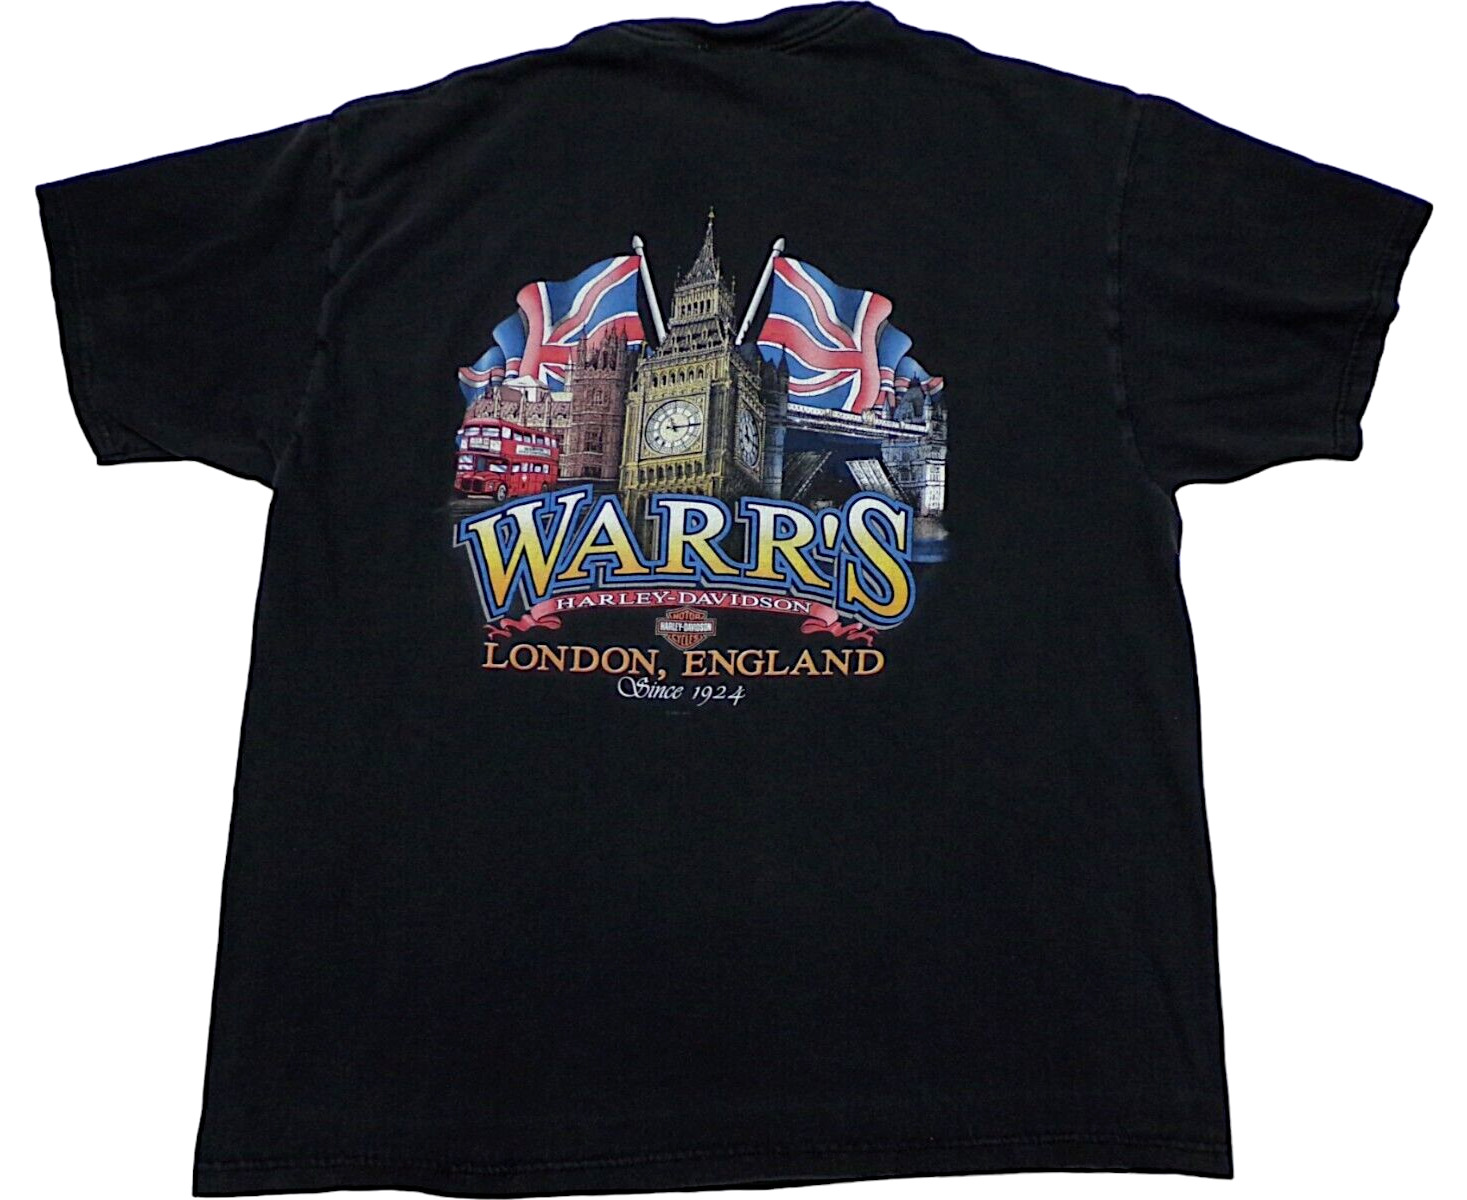 Vtg 2001 Harley Davidson London England Shirt Men's XL Warr's Made in USA